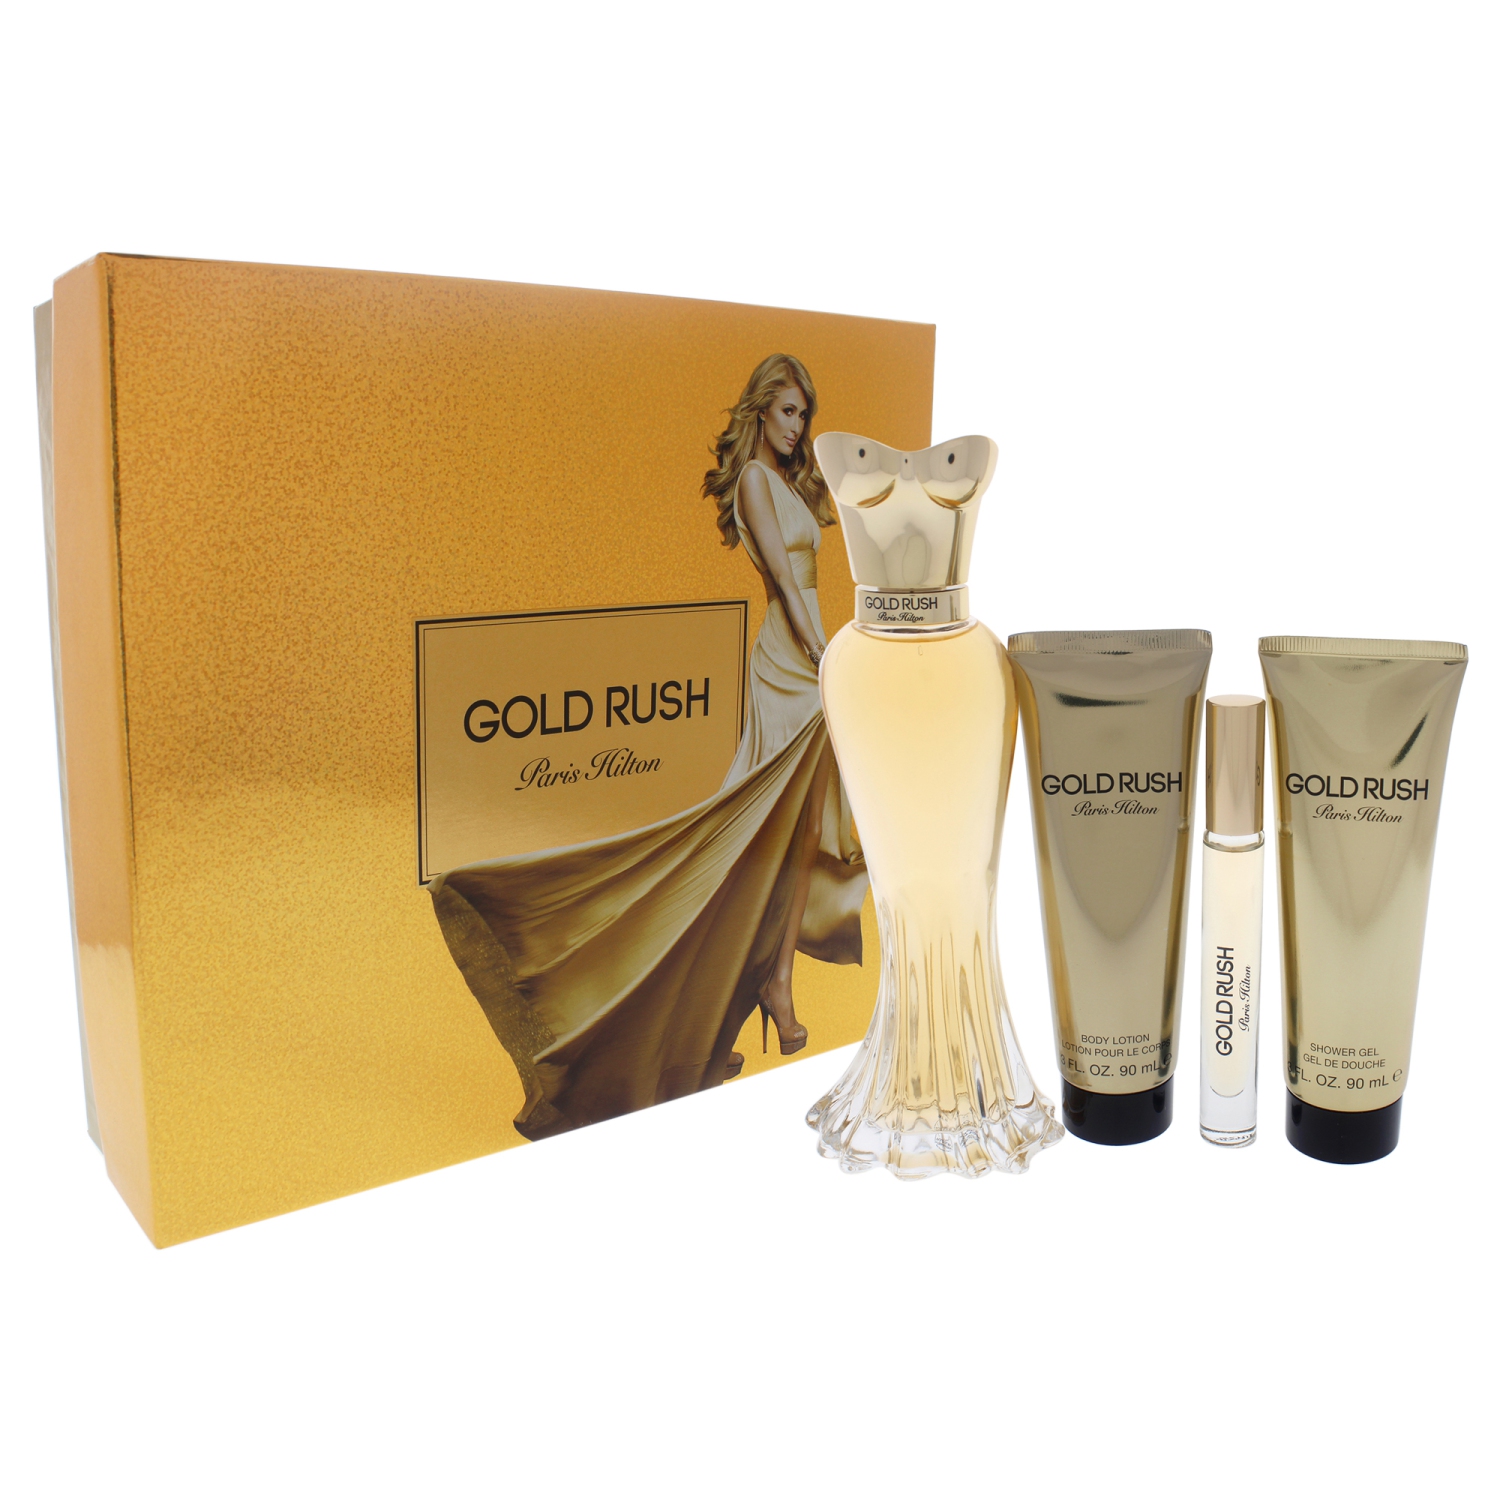 Gold Rush by Paris Hilton for Women - 4 Pc Gift Set 3.4oz EDP Spray, 0.20oz EDP Rollerball, 3oz Body Lotion, 3oz Shower Gel